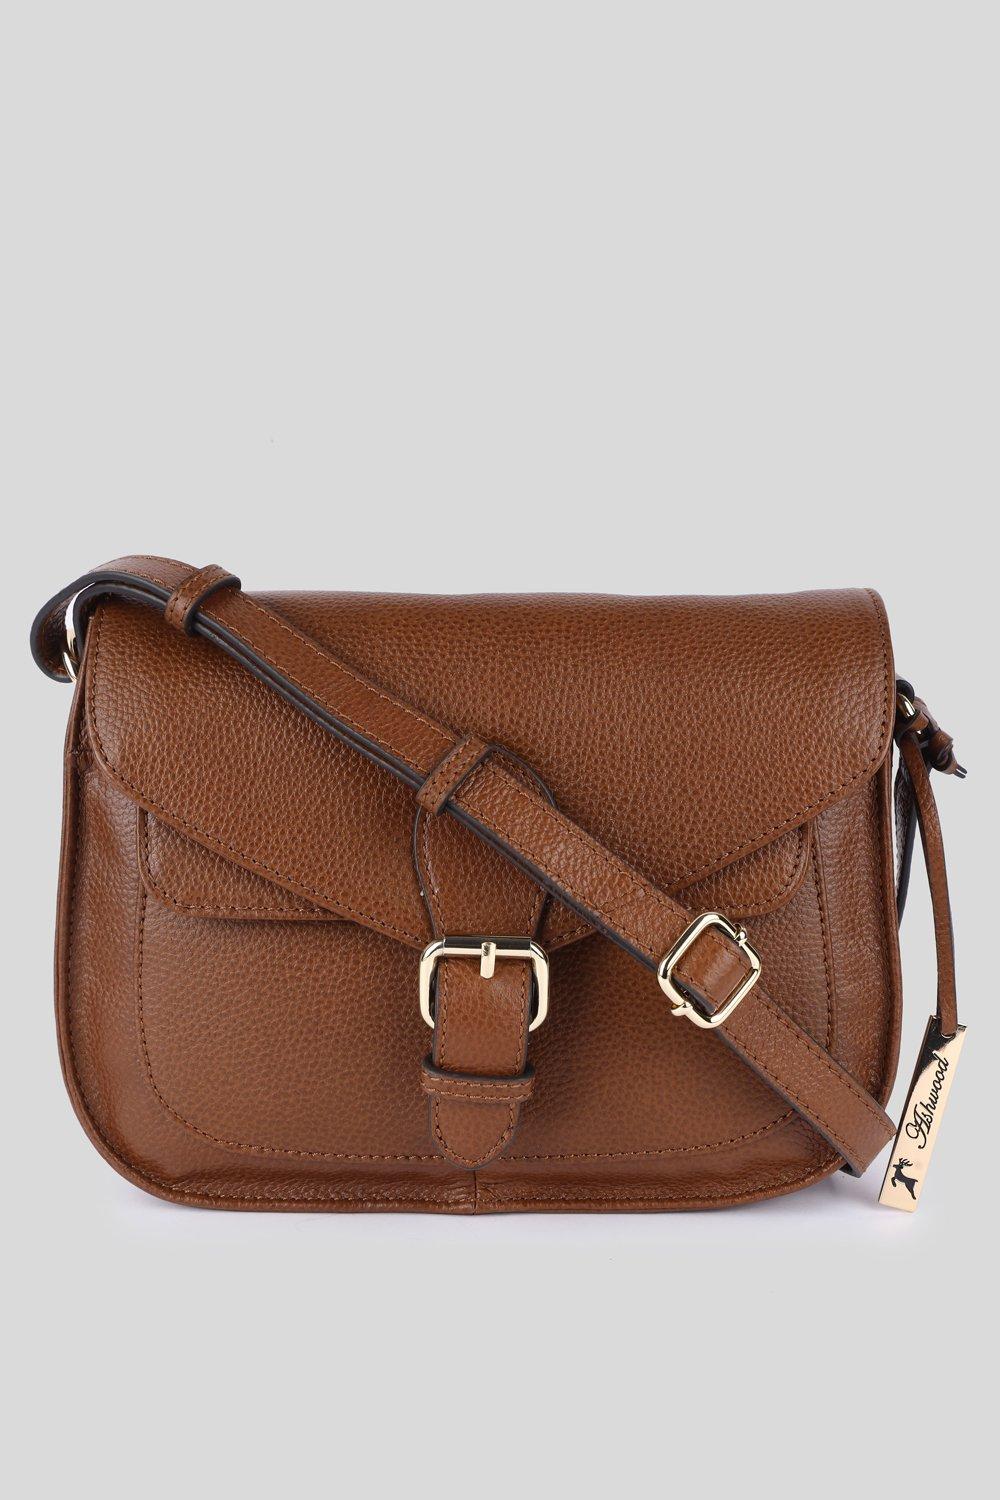 Сумка через плечо Stile Fiorentino из натуральной кожи Ashwood Leather, коричневый сумка ashwood leather m 52 tan